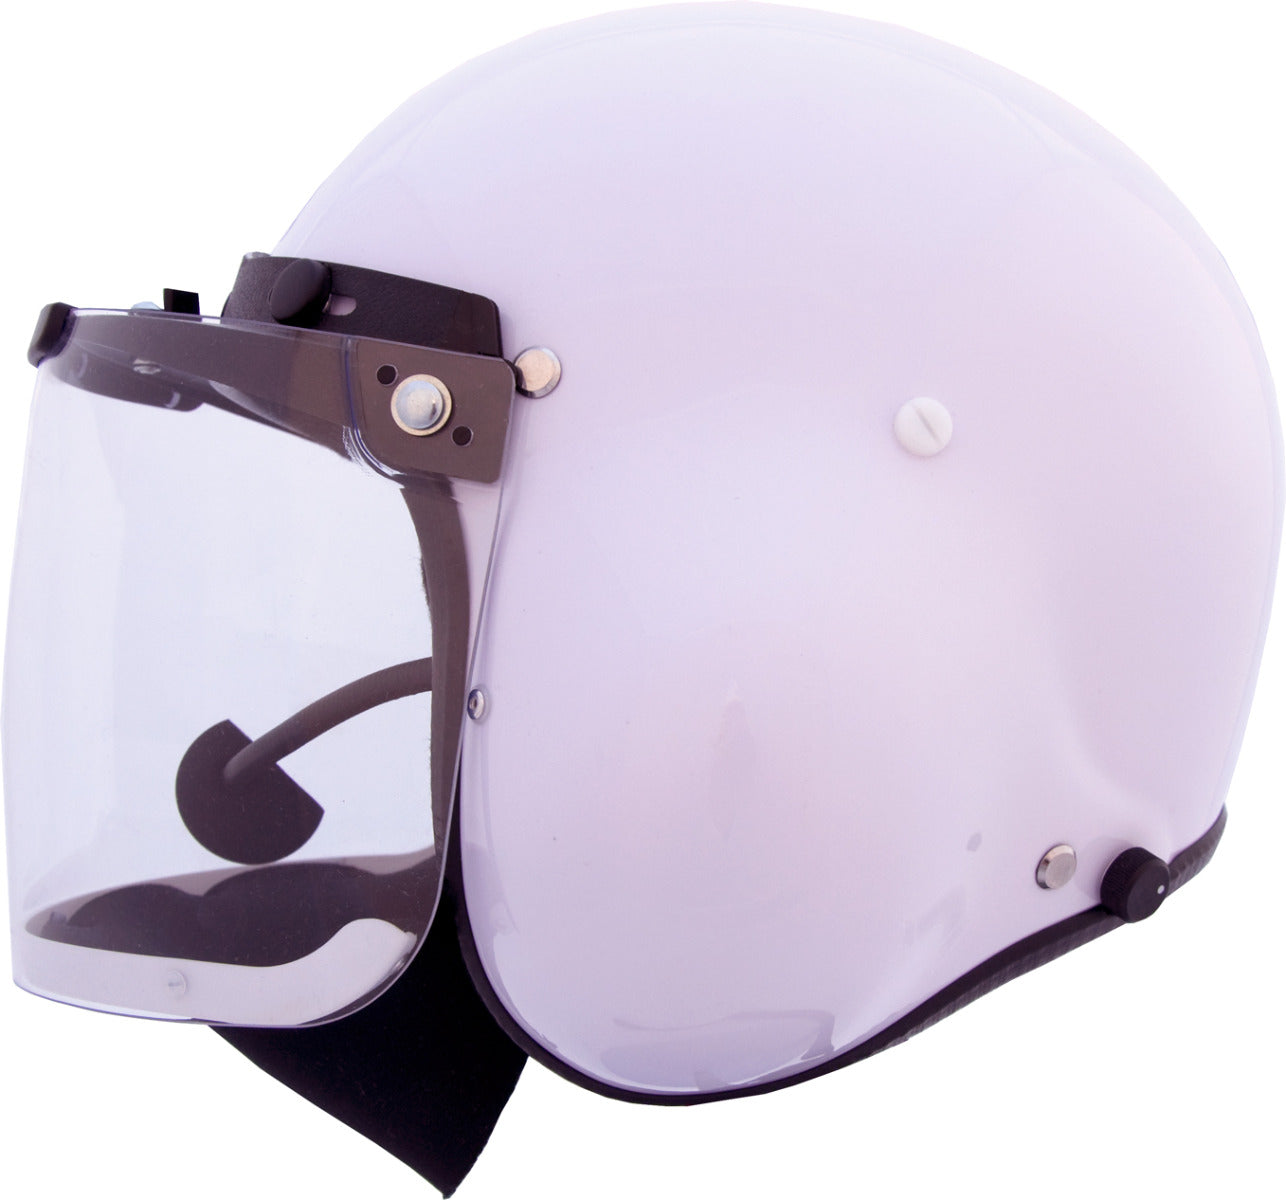 Integral helmet with internal PM-100 headset